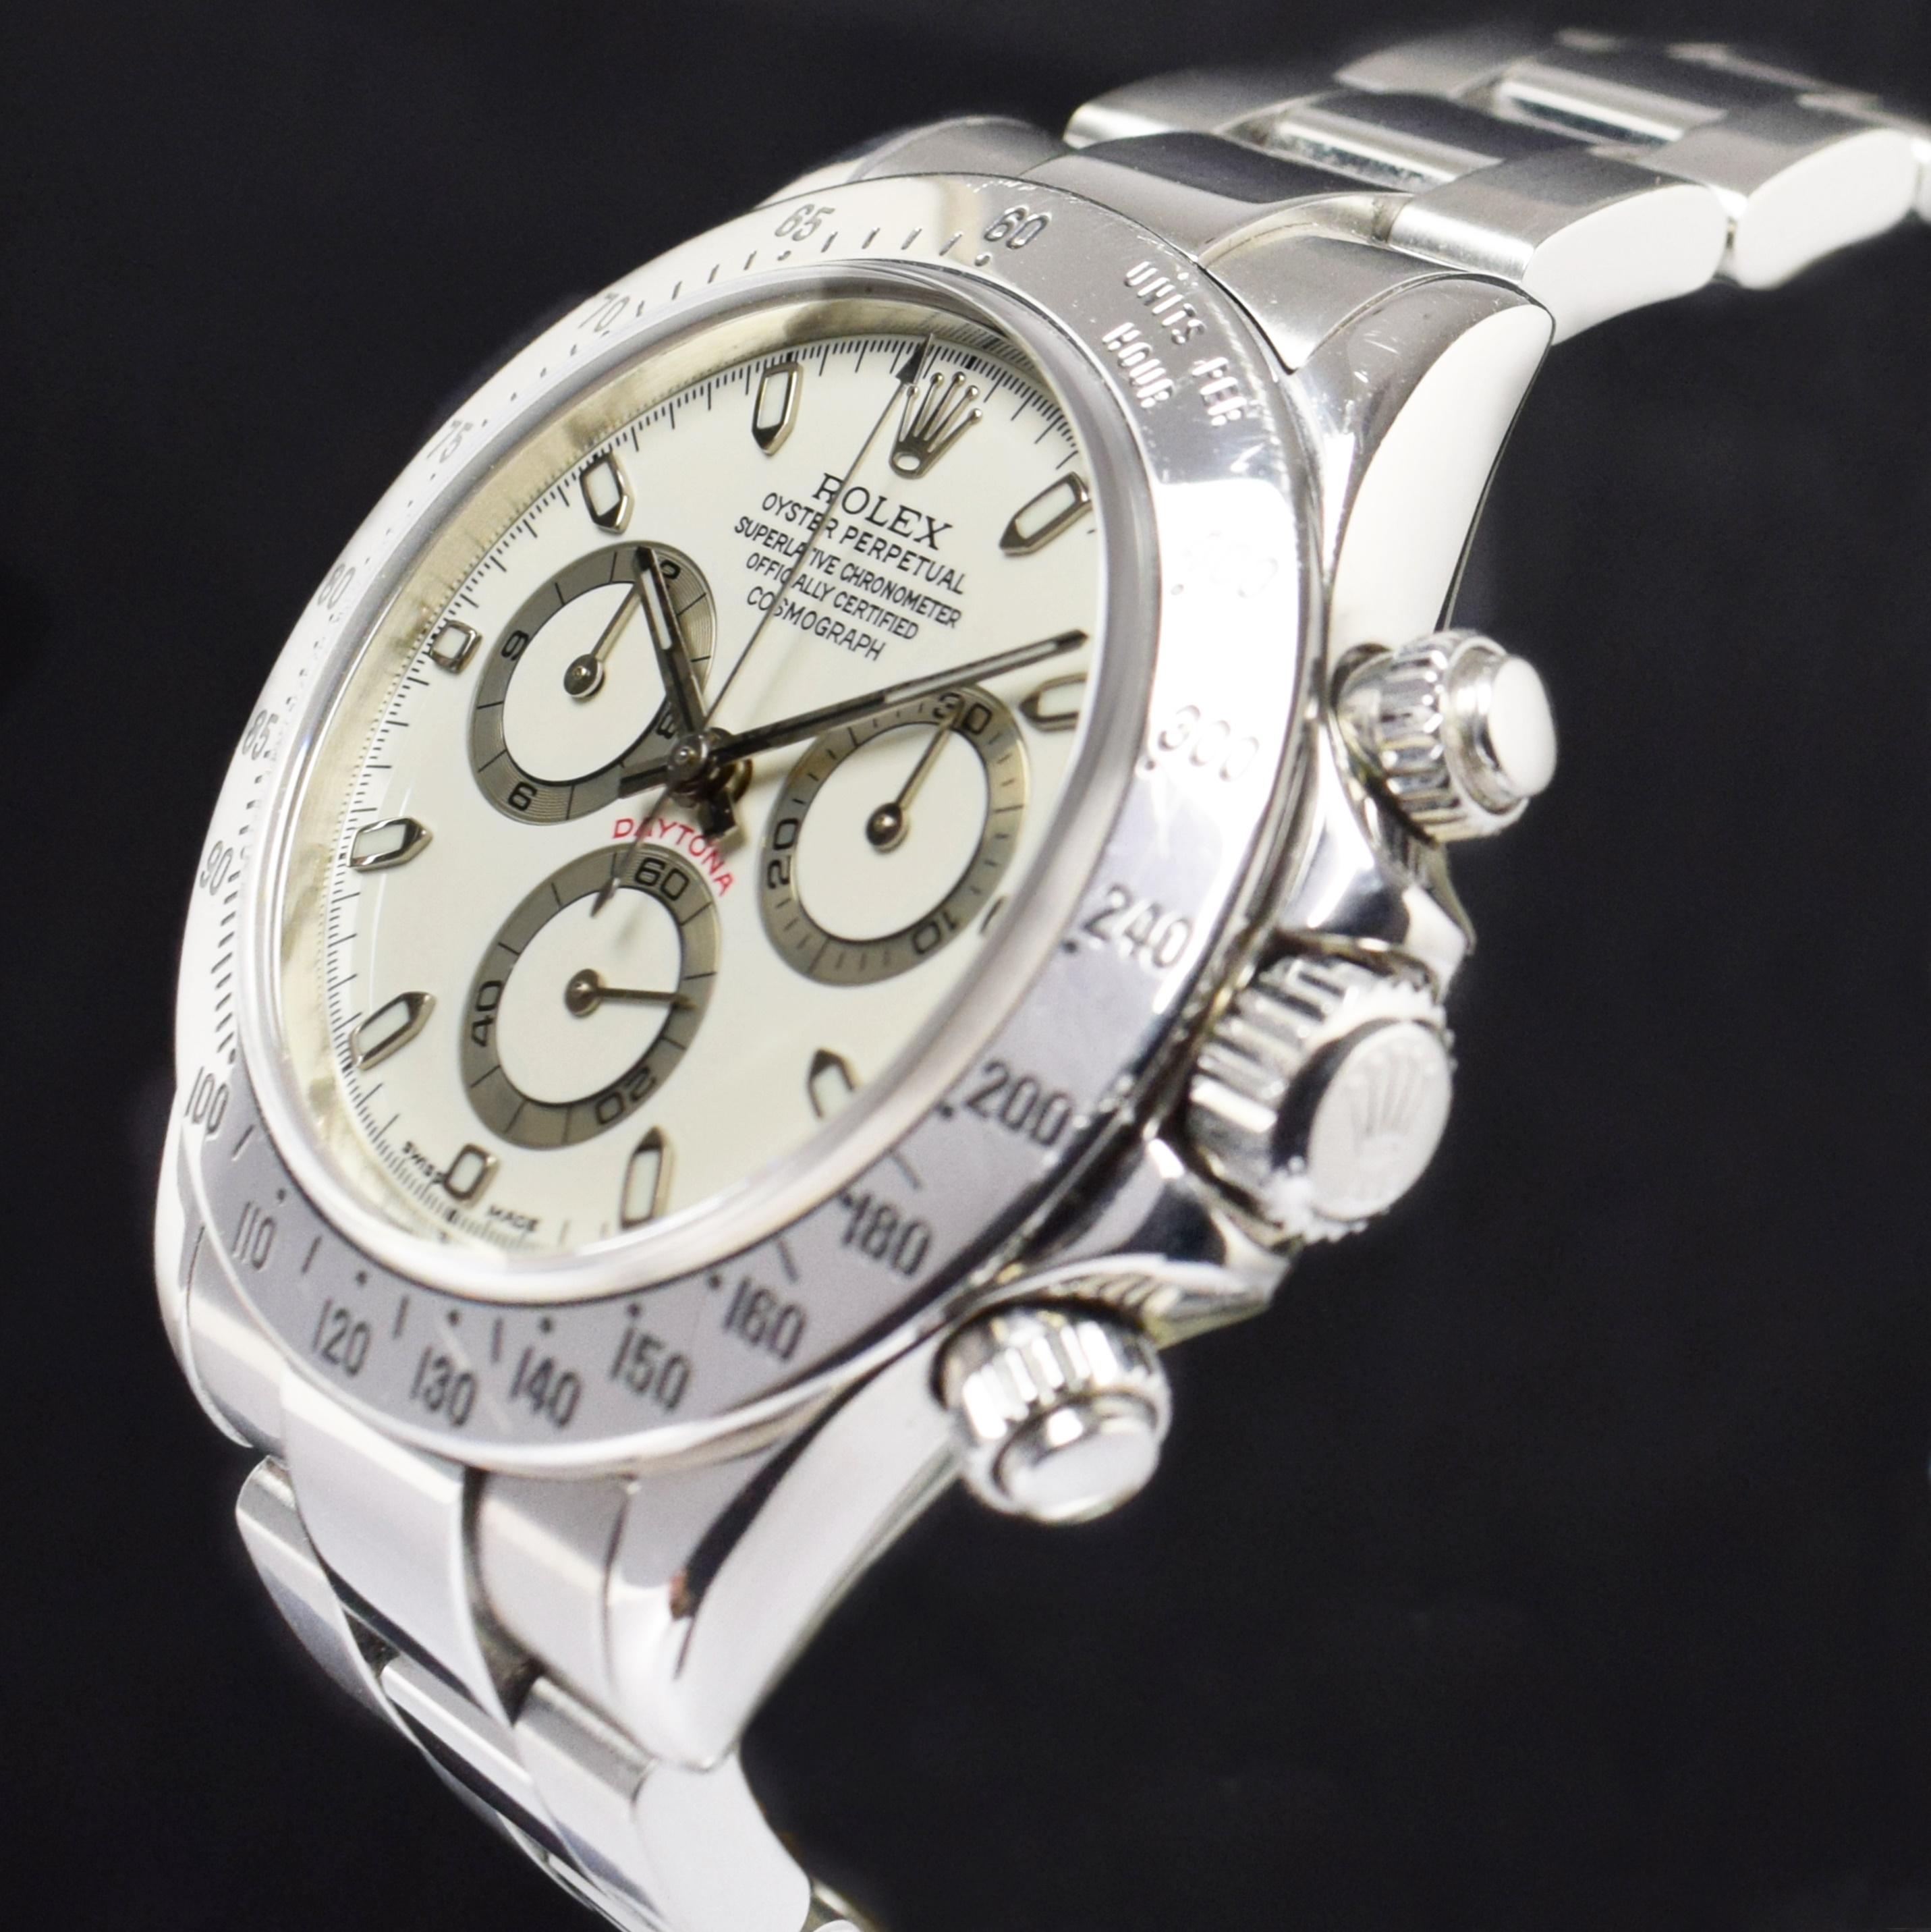 Rolex Daytona Chronograph White Ivory Creamy Dial 116520 Steel Watch 2001 Pour hommes en vente